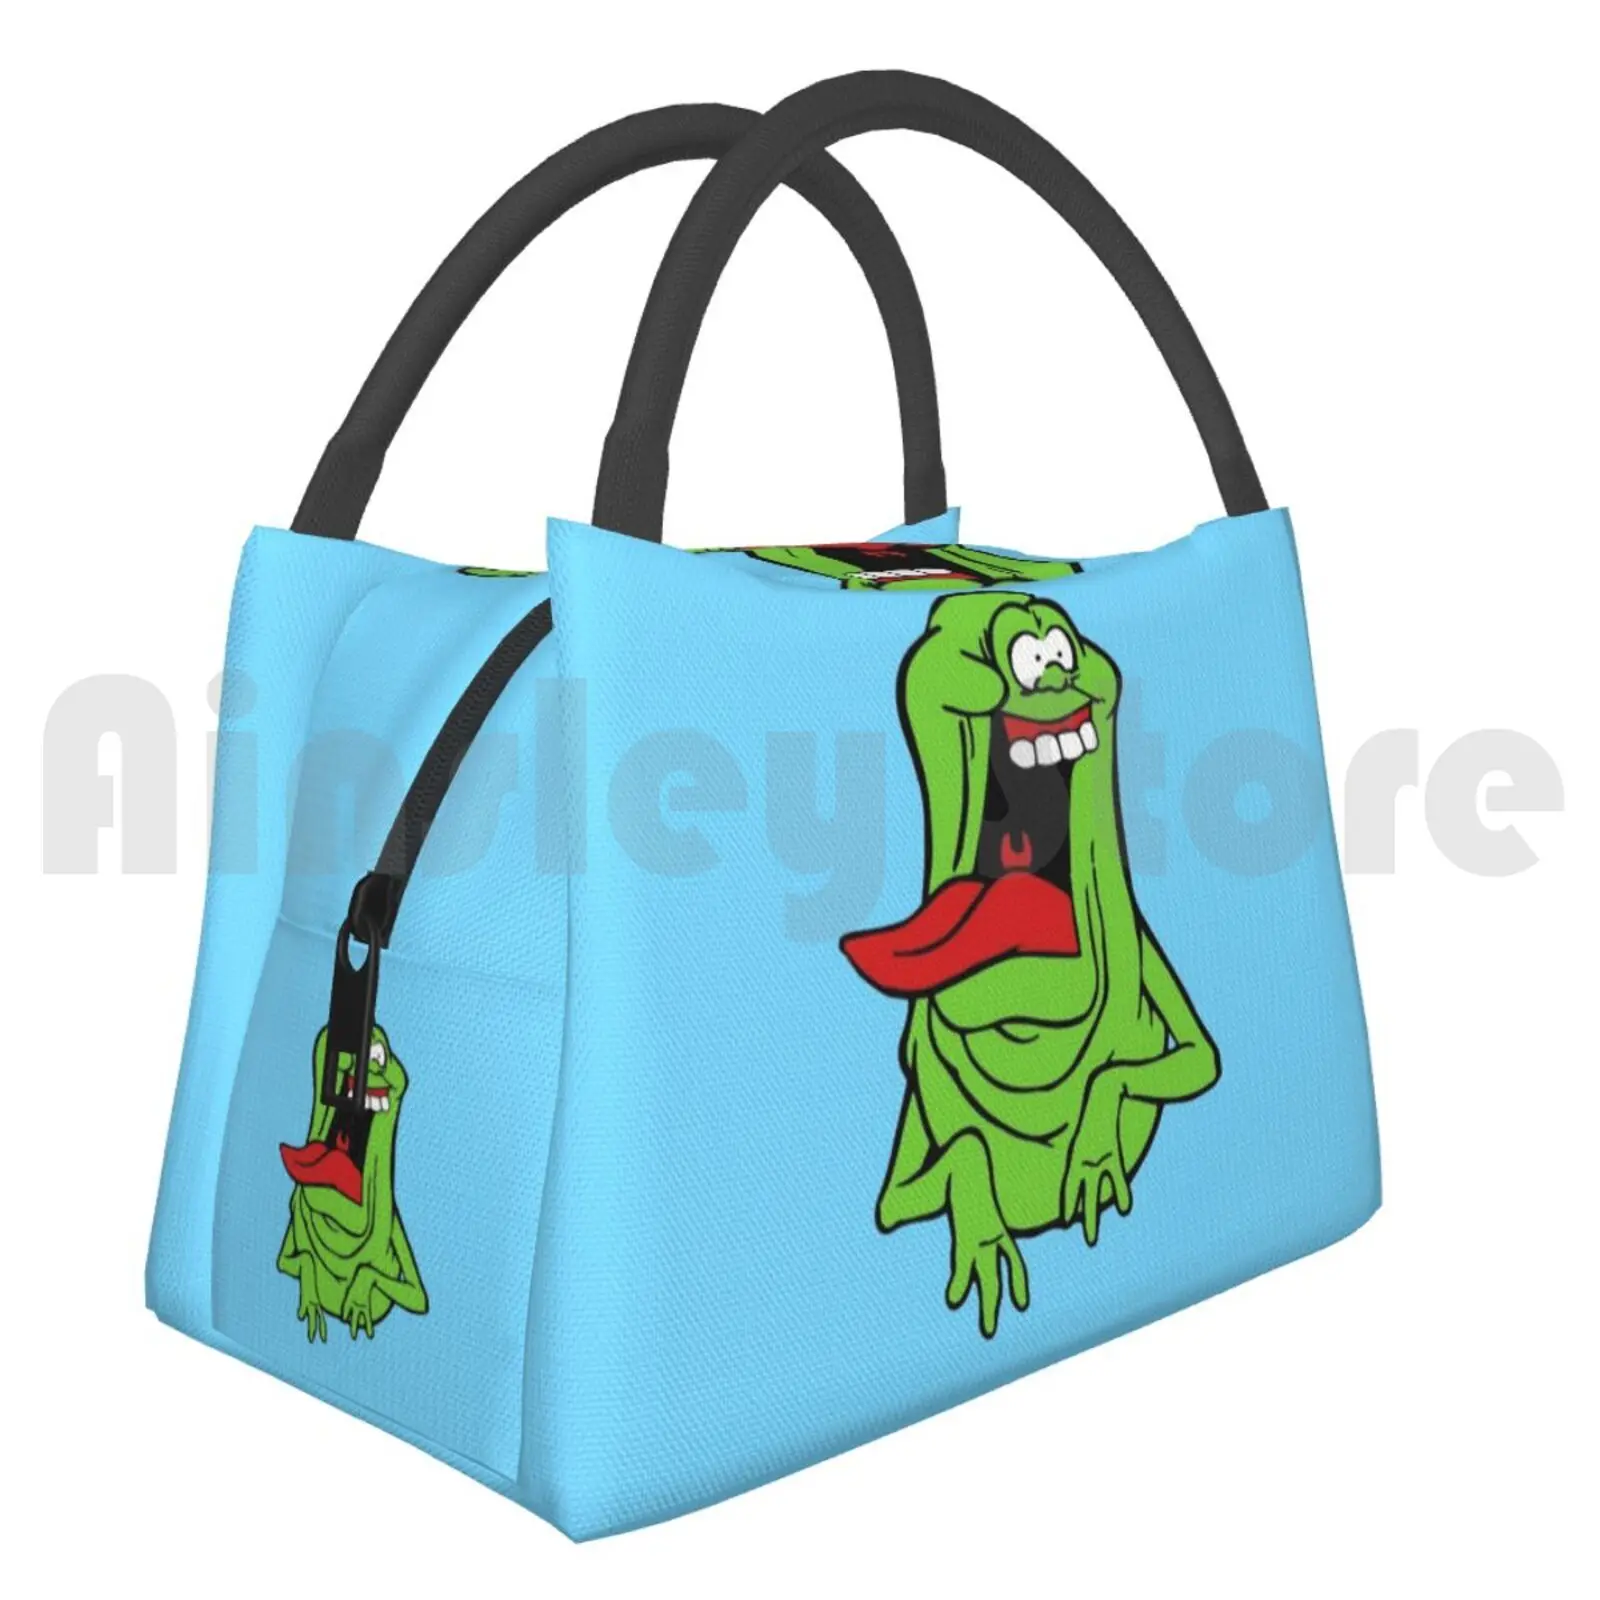 

Portable Insulation Bag Slimer Ghostbusters Slimer Ghostbusters Green Ghost Spooky Creepy Animated Animation